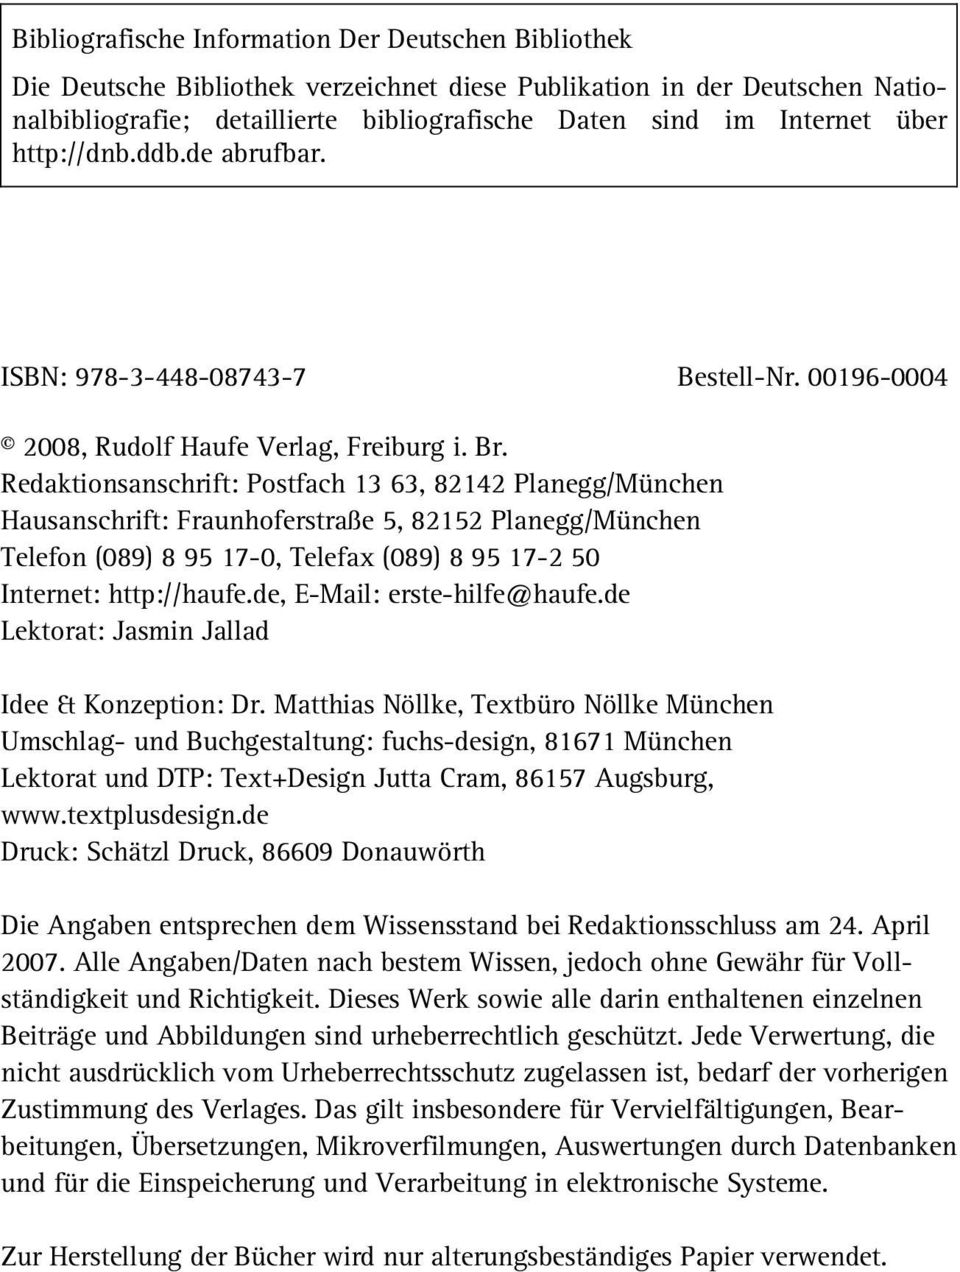 Redaktionsanschrift: Postfach 13 63, 82142 Planegg/München Hausanschrift: Fraunhoferstraße 5, 82152 Planegg/München Telefon (089) 8 95 17-0, Telefax (089) 8 95 17-2 50 Internet: http://haufe.